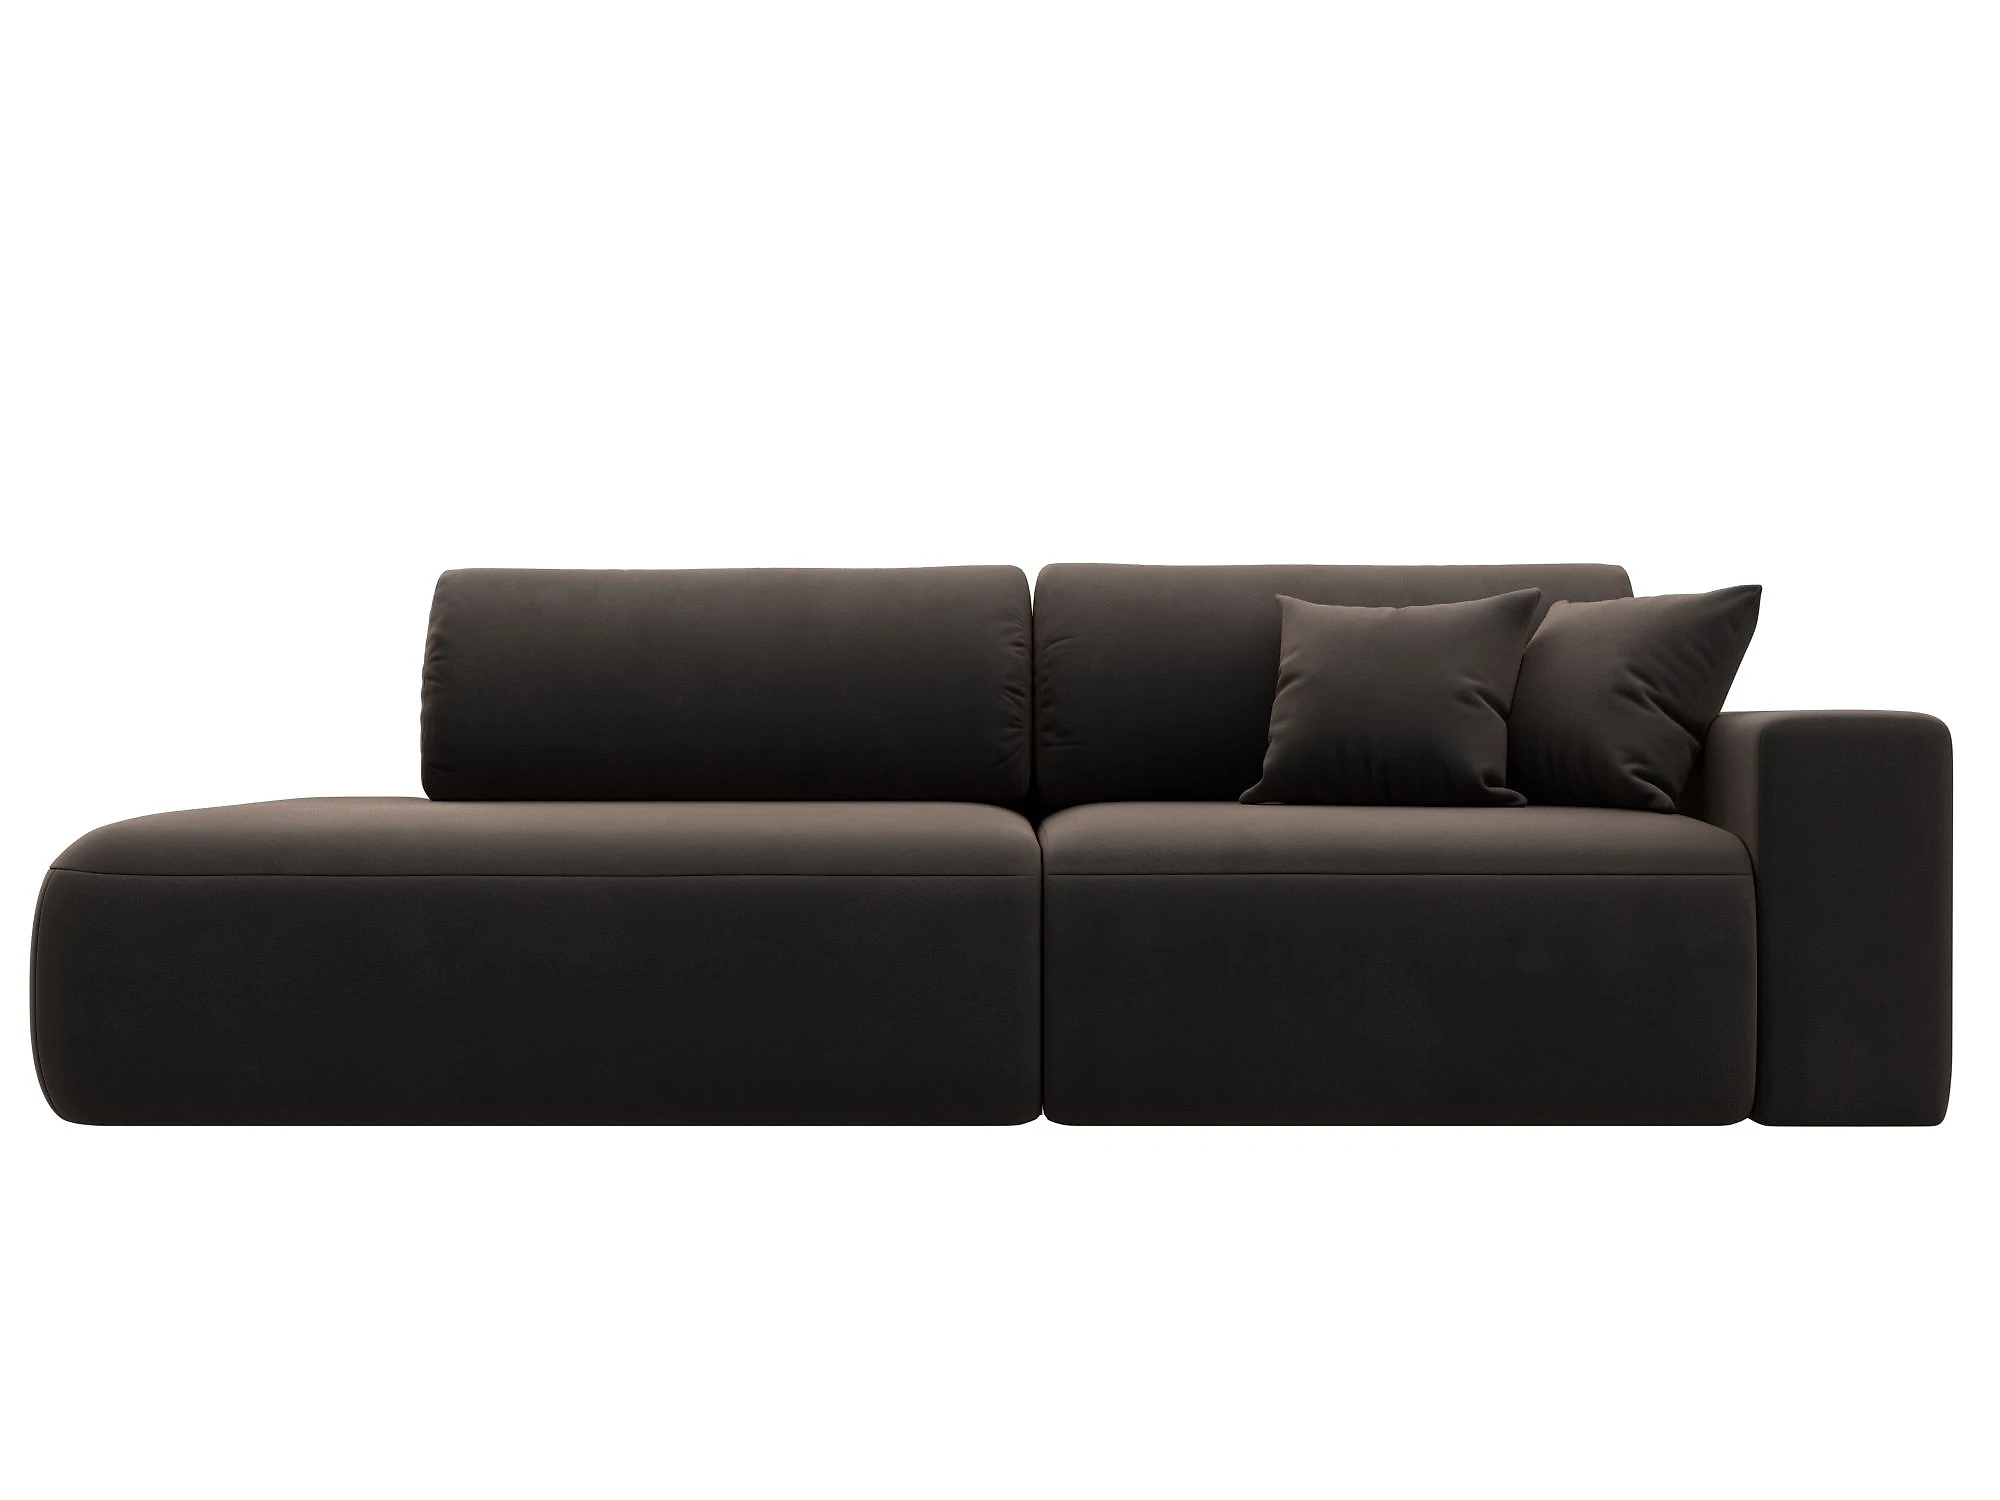 Коричневый диван Лига-036 Модерн Плюш Дизайн 5